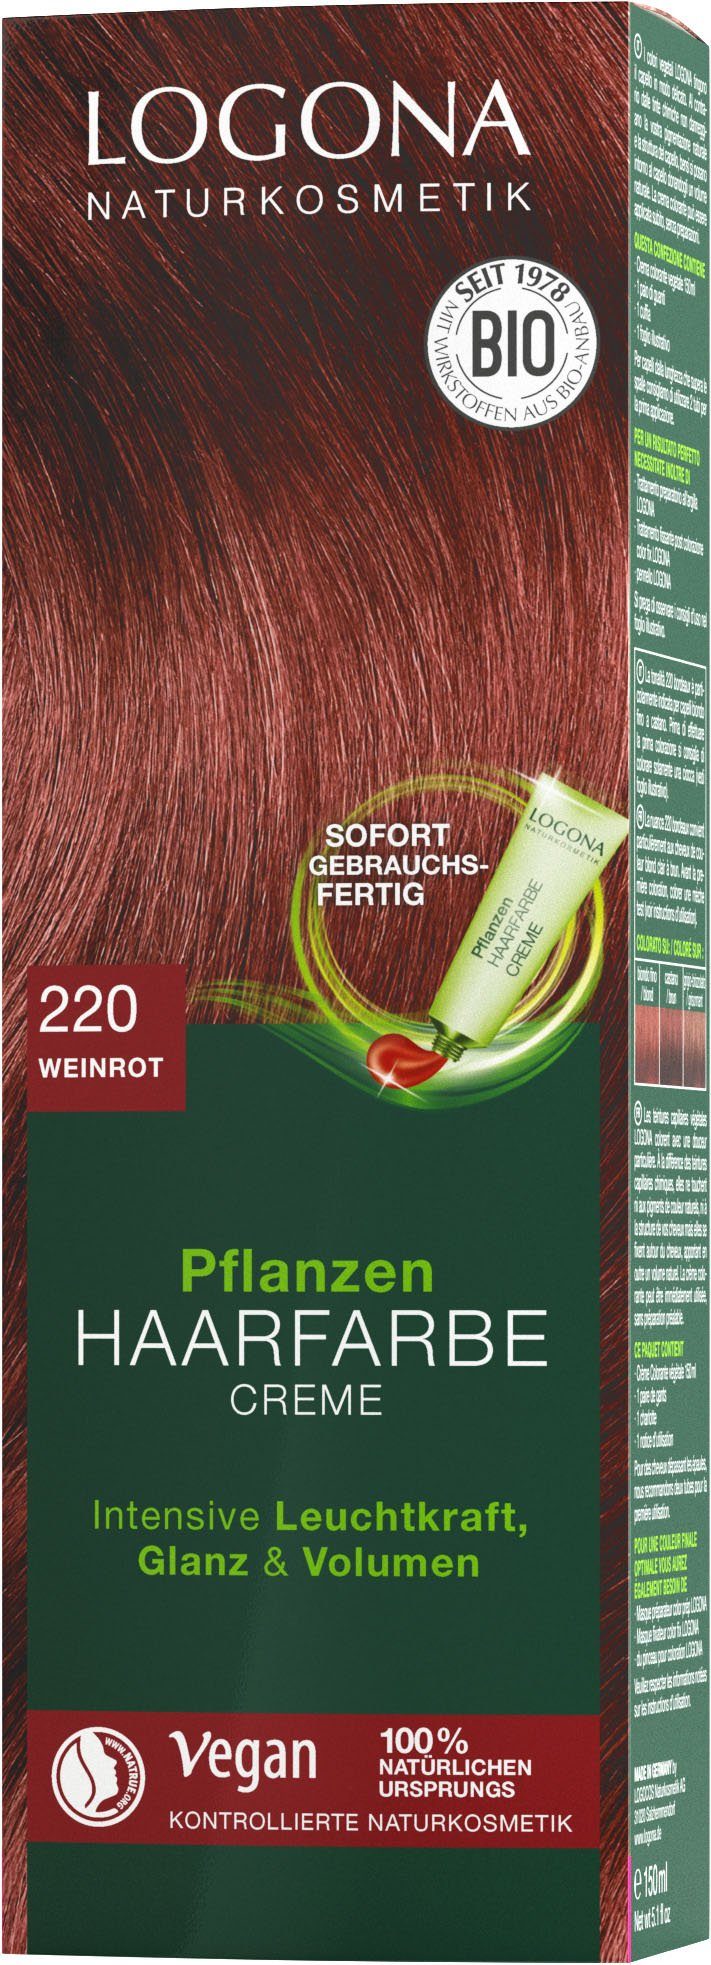 LOGONA Haarfarbe Logona weinrot 220 Pflanzen-Haarfarbe Creme